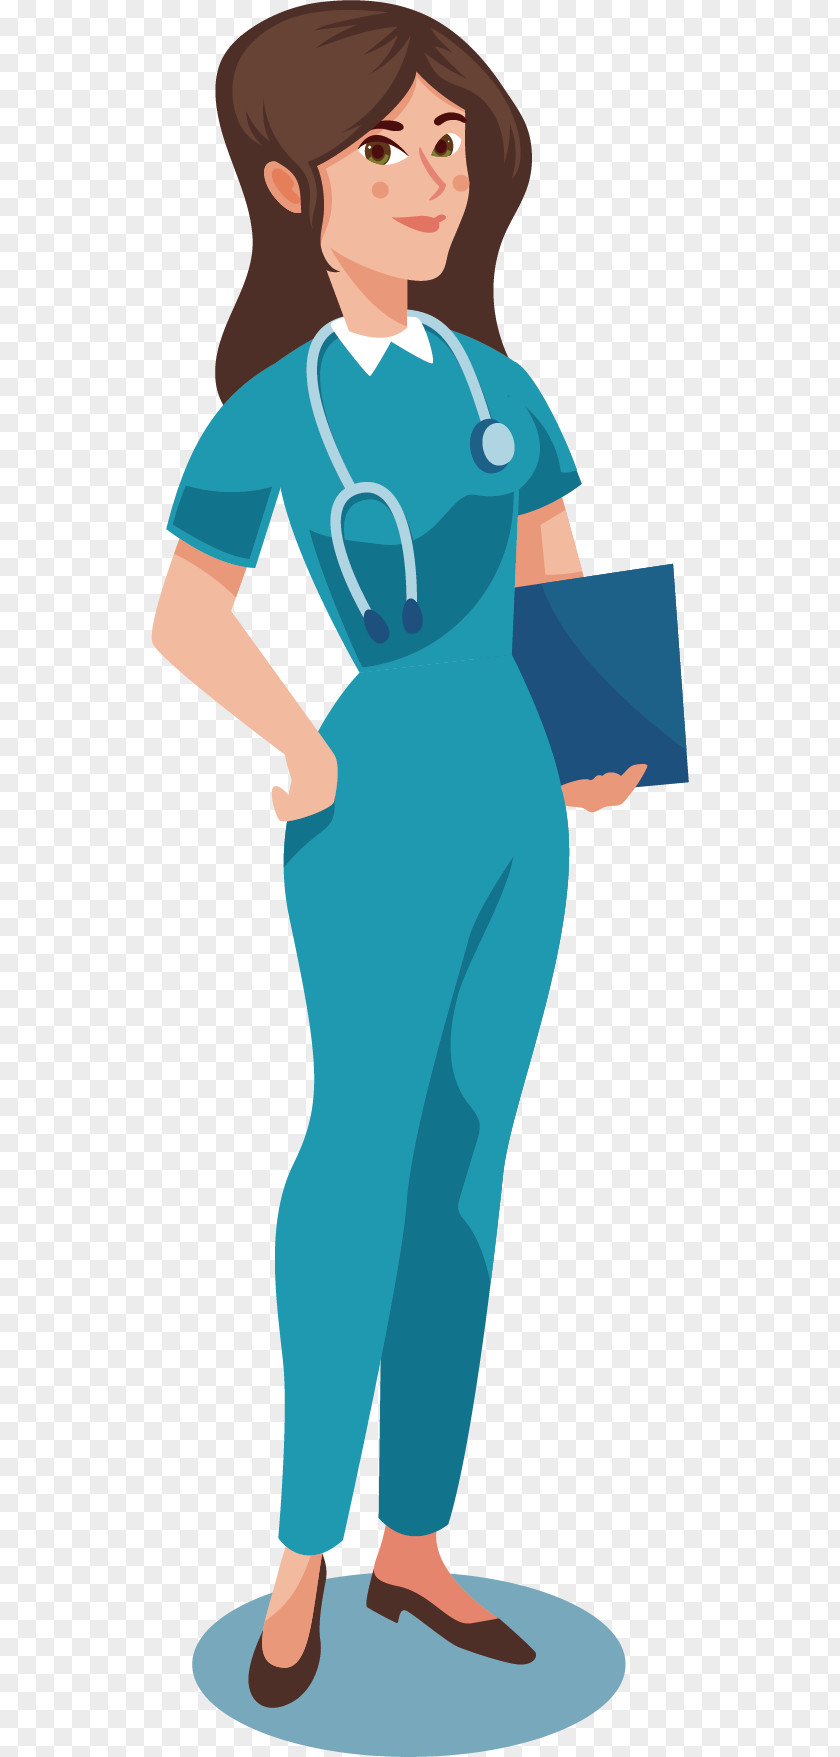 Cartoon Woman Doctor Illustration PNG